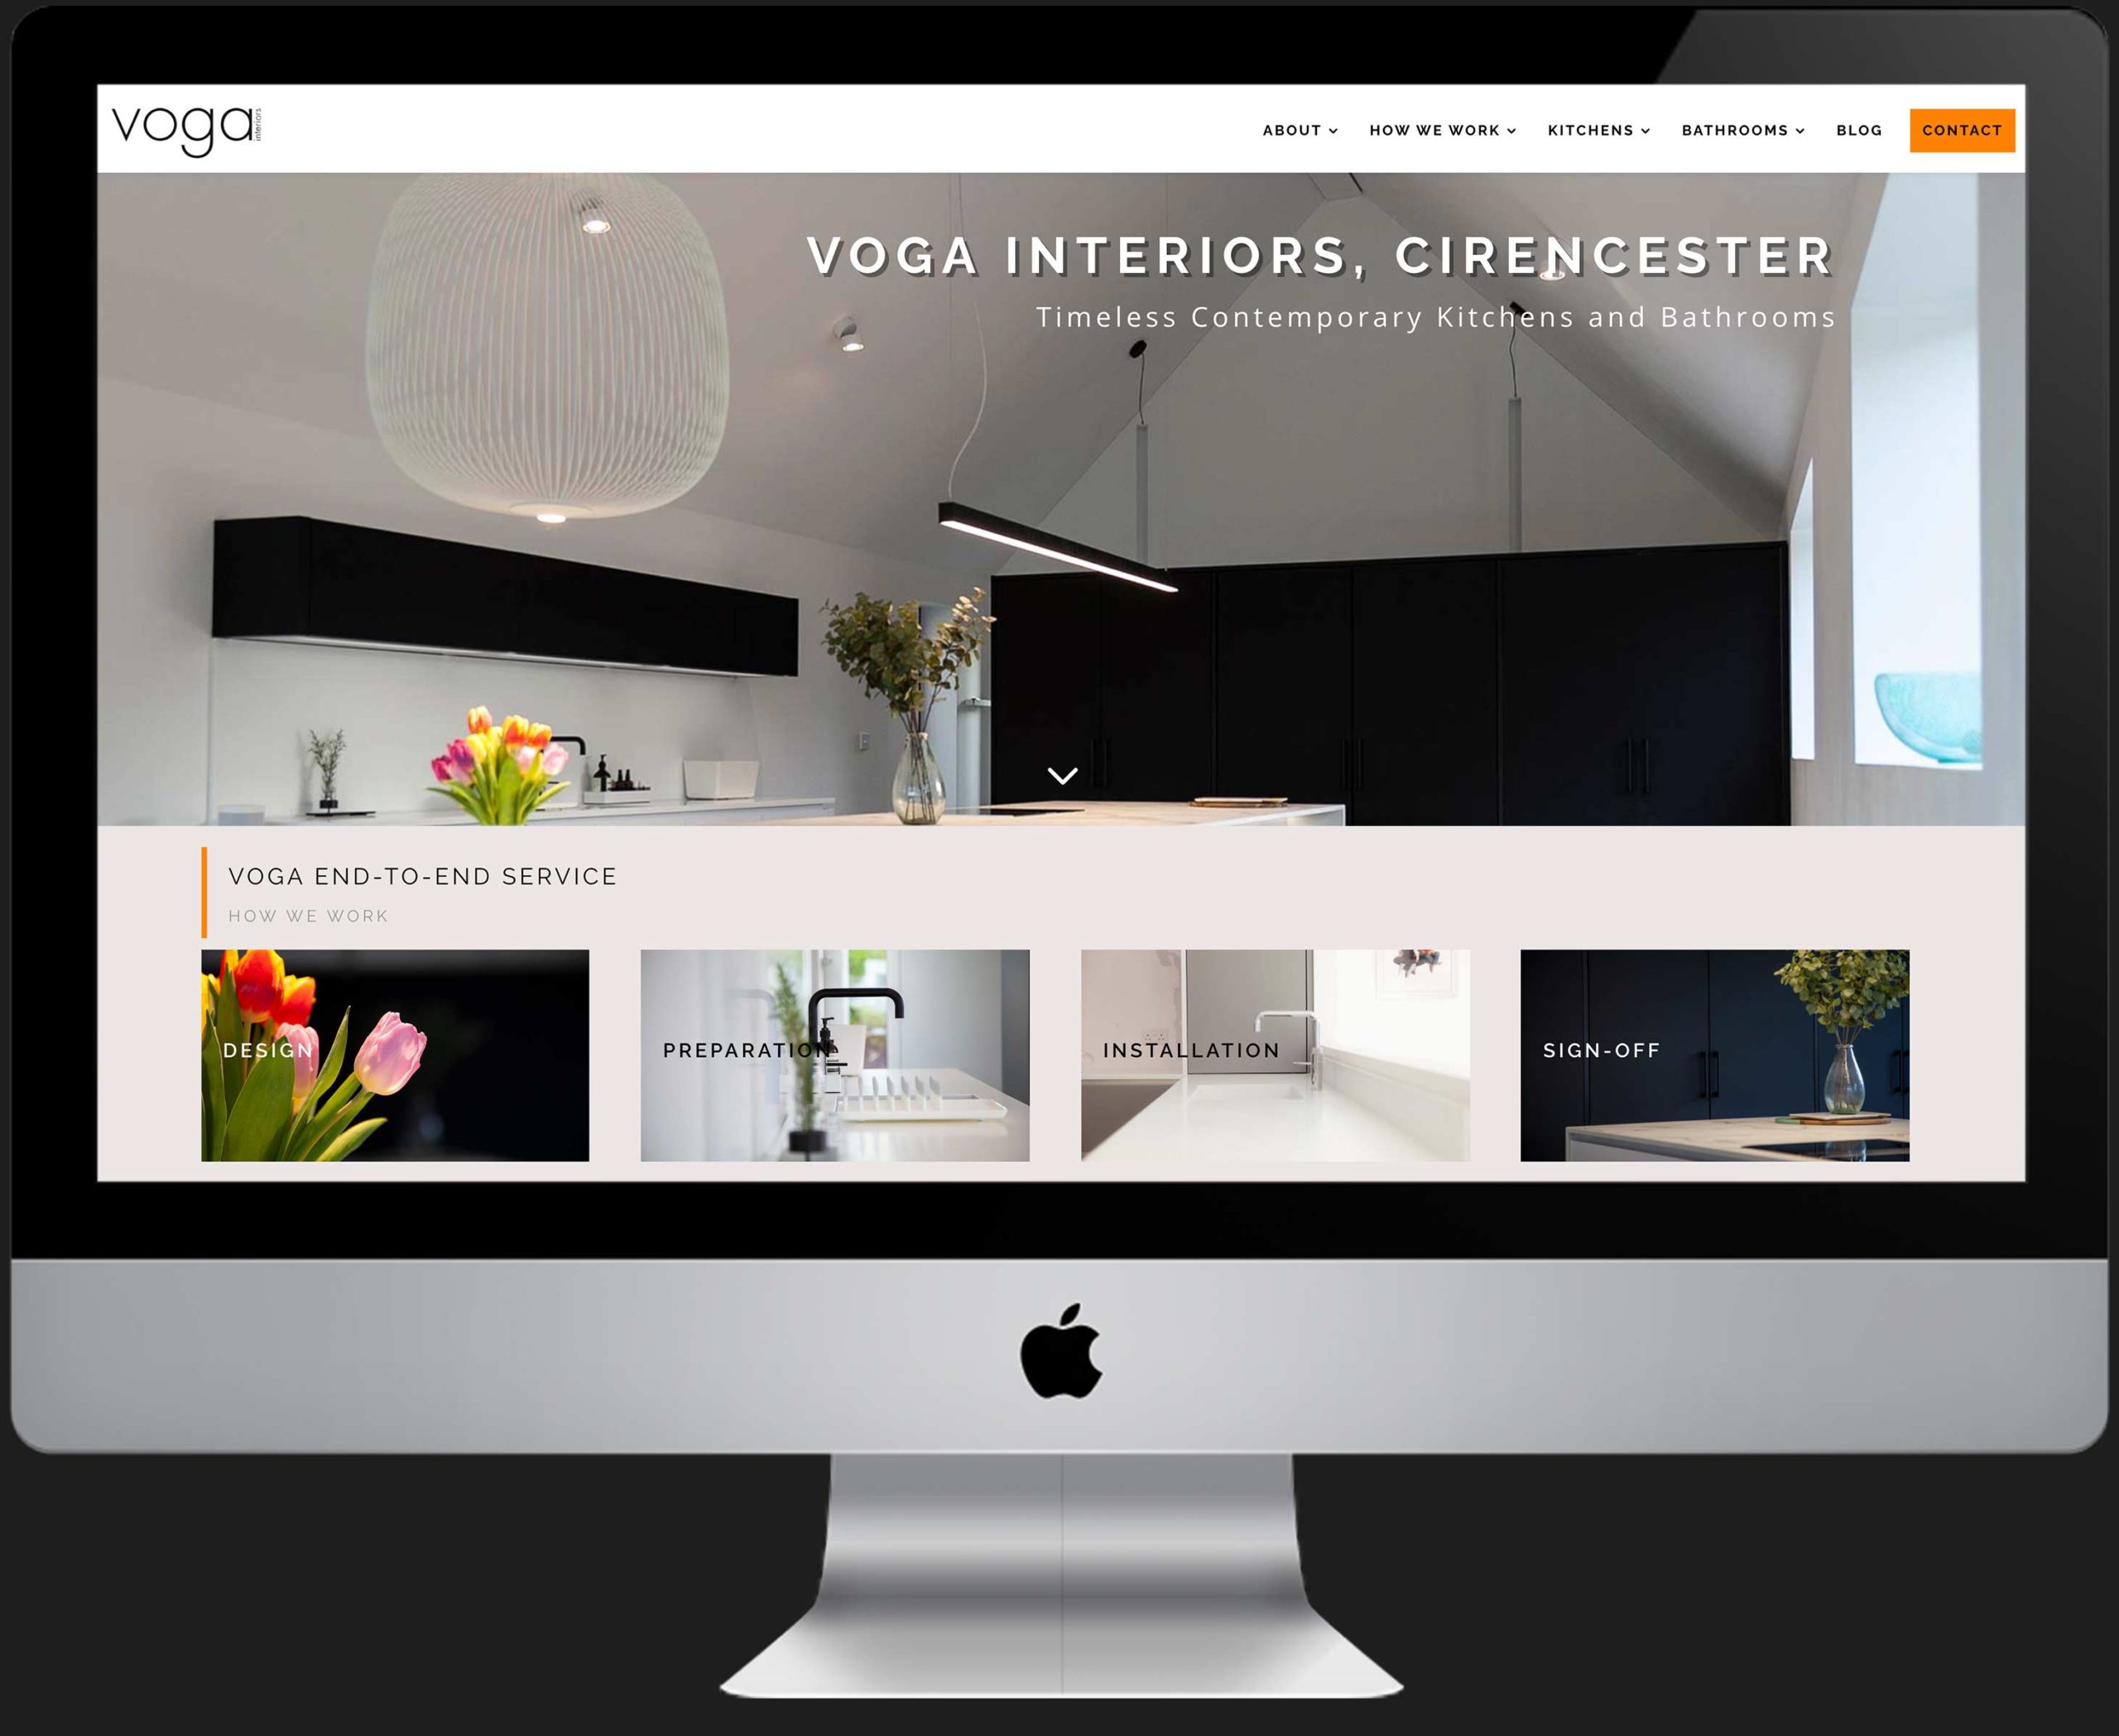 Home improvement business website